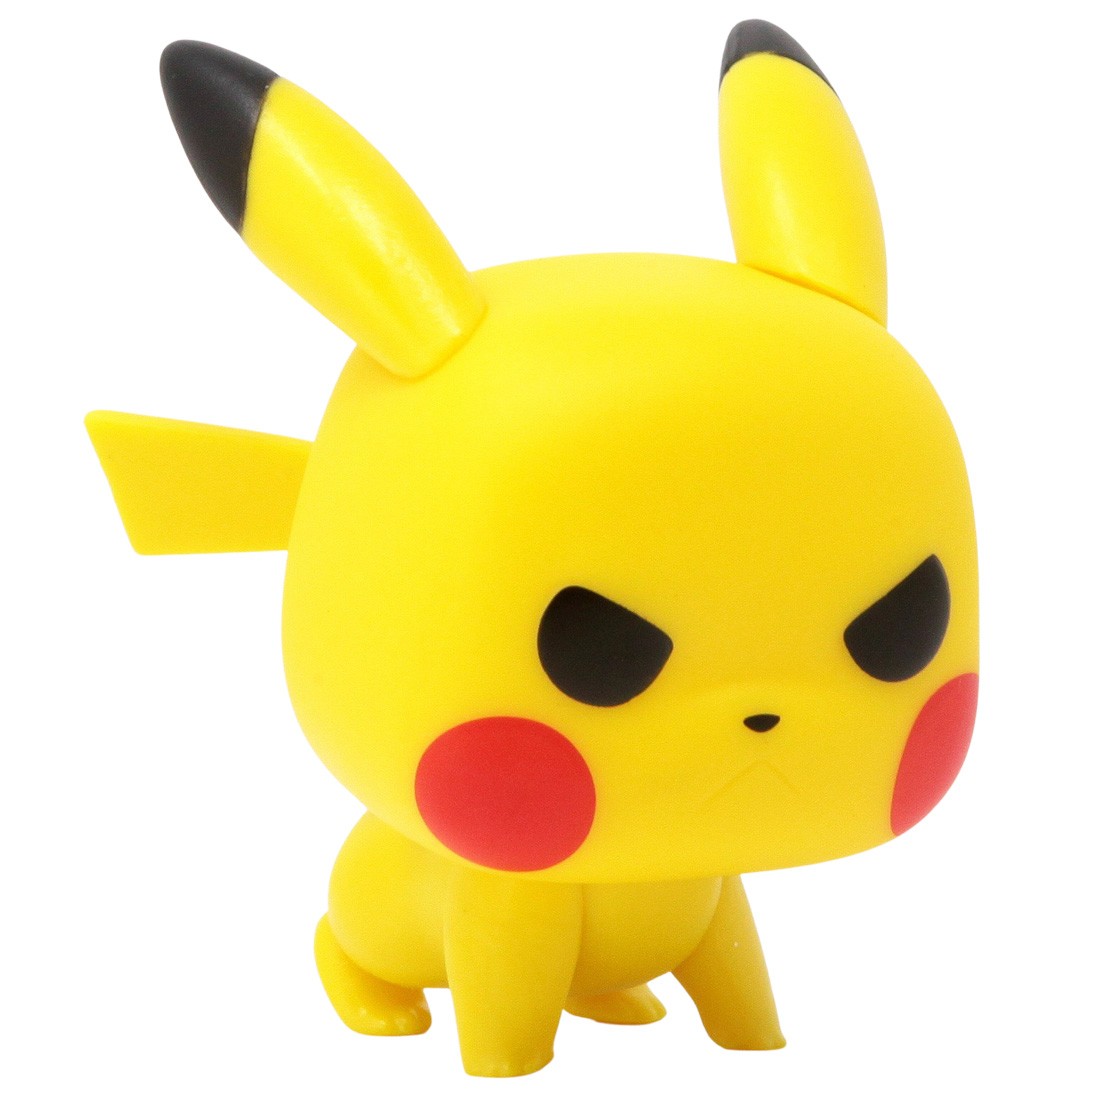 Dripping Midlertidig Udelade Funko Pop Games Pokemon - Pikachu Attack Stance yellow